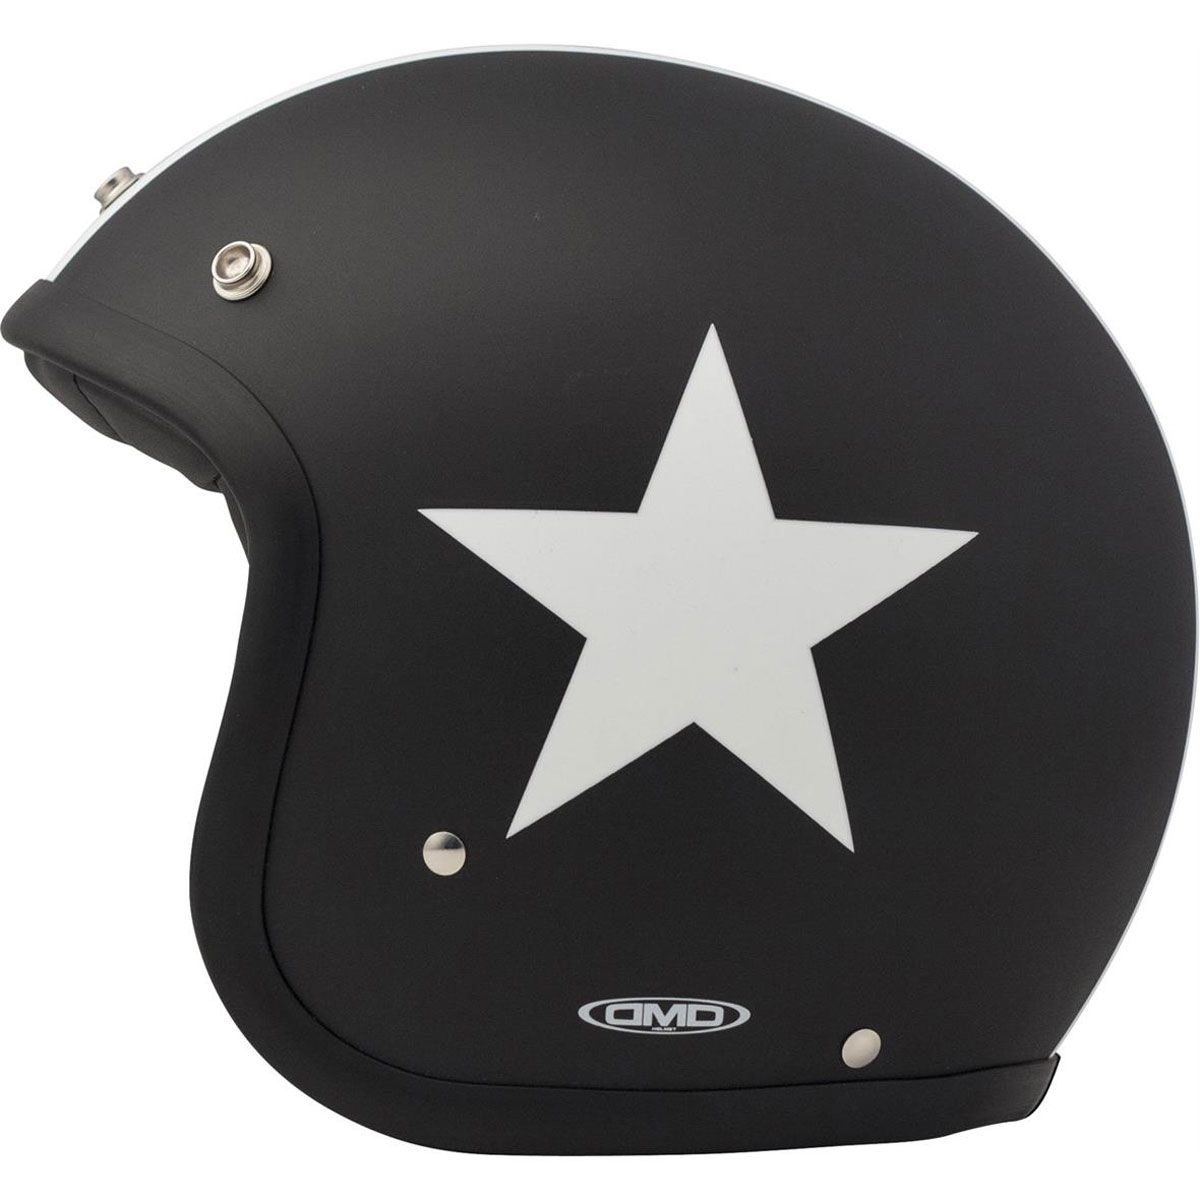 DMD DMDSB1 jet helmet cafe racer vintage star black white